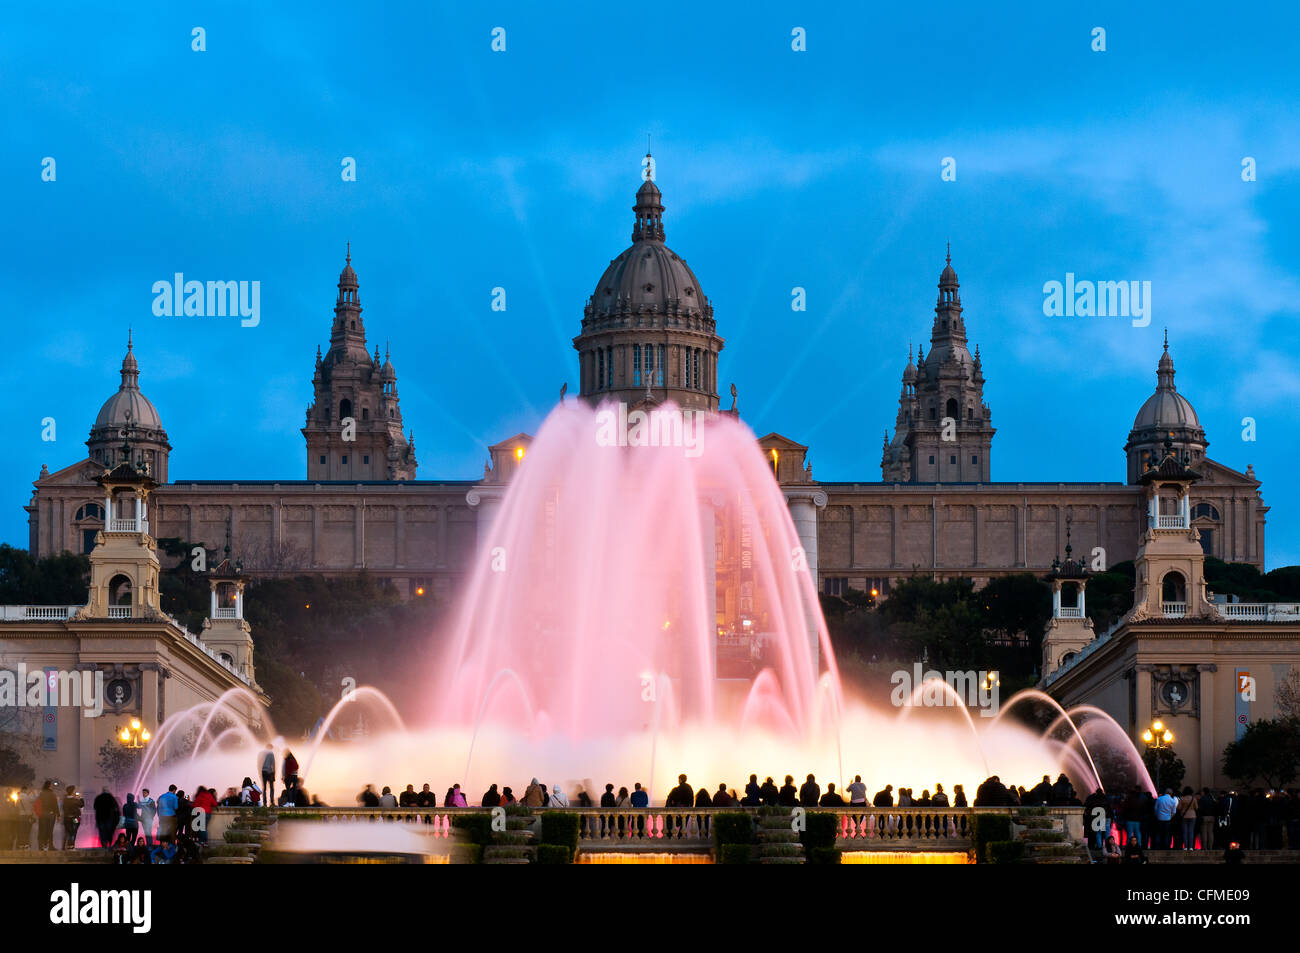 Font Magica or Magic Fountain with Palau Nacional in the background, Barcelona, Catalonia, Spain Stock Photo